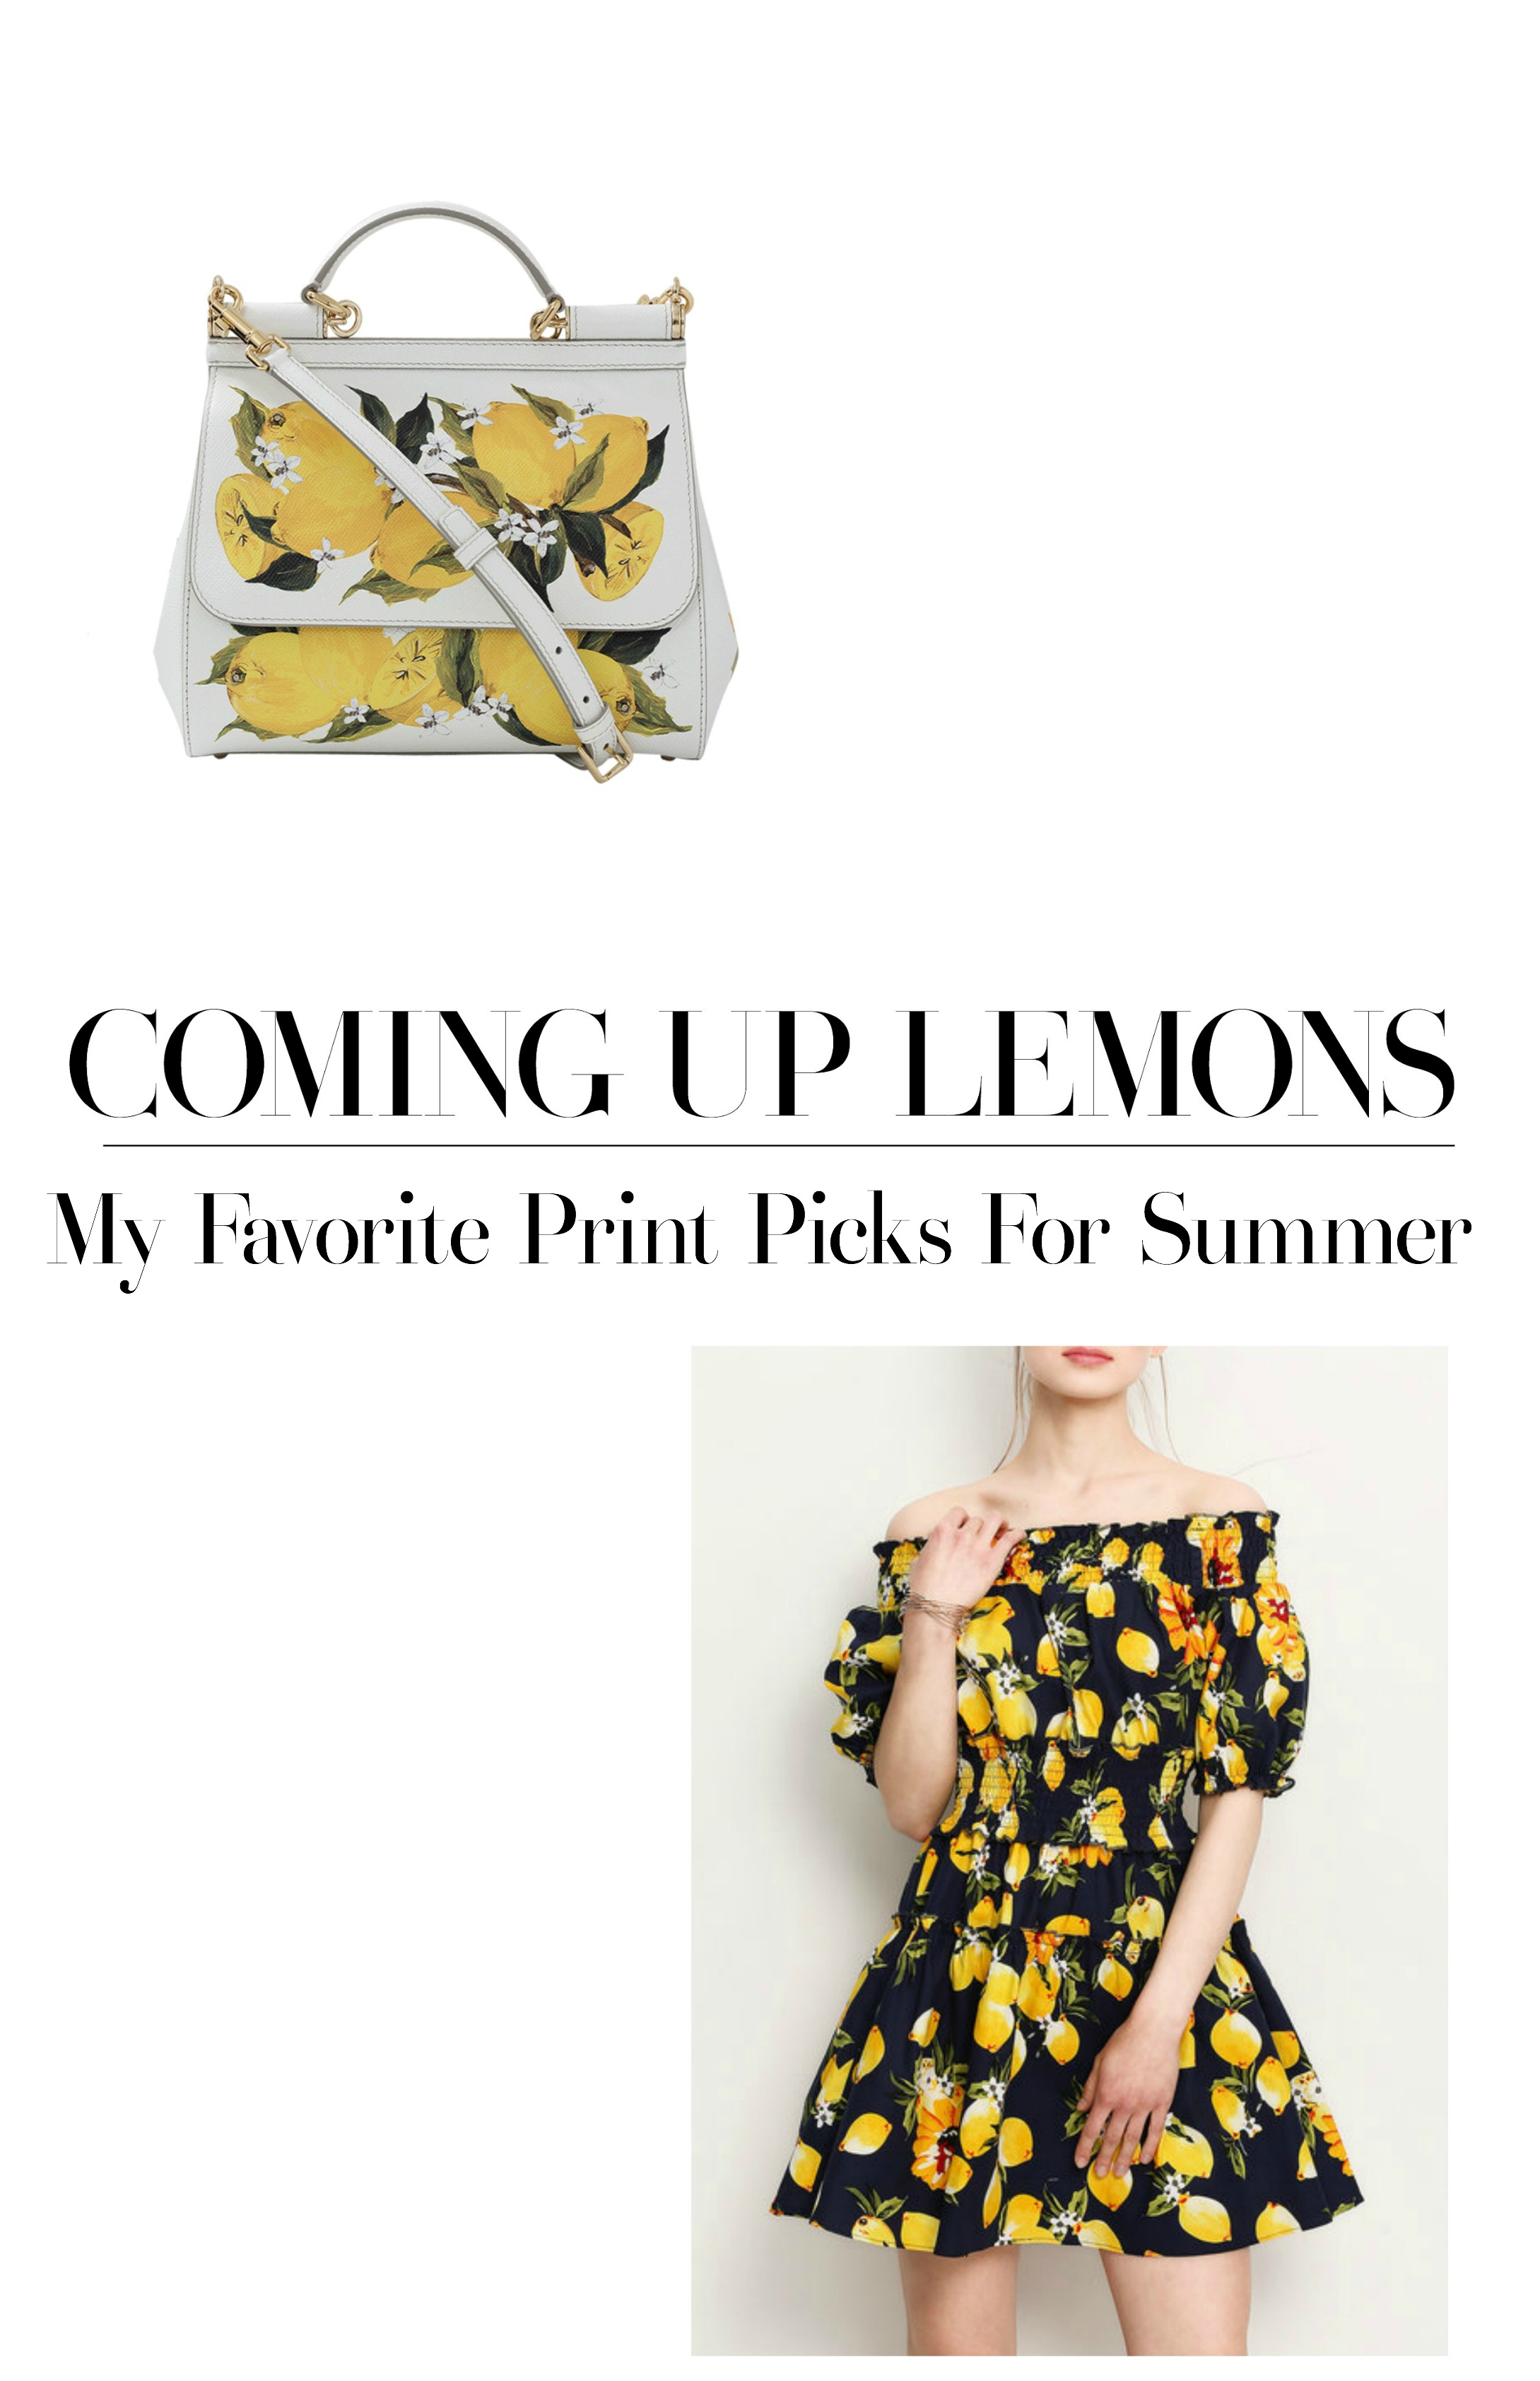 When Life Gives You Lemons: My Favorite Print Picks For Summer